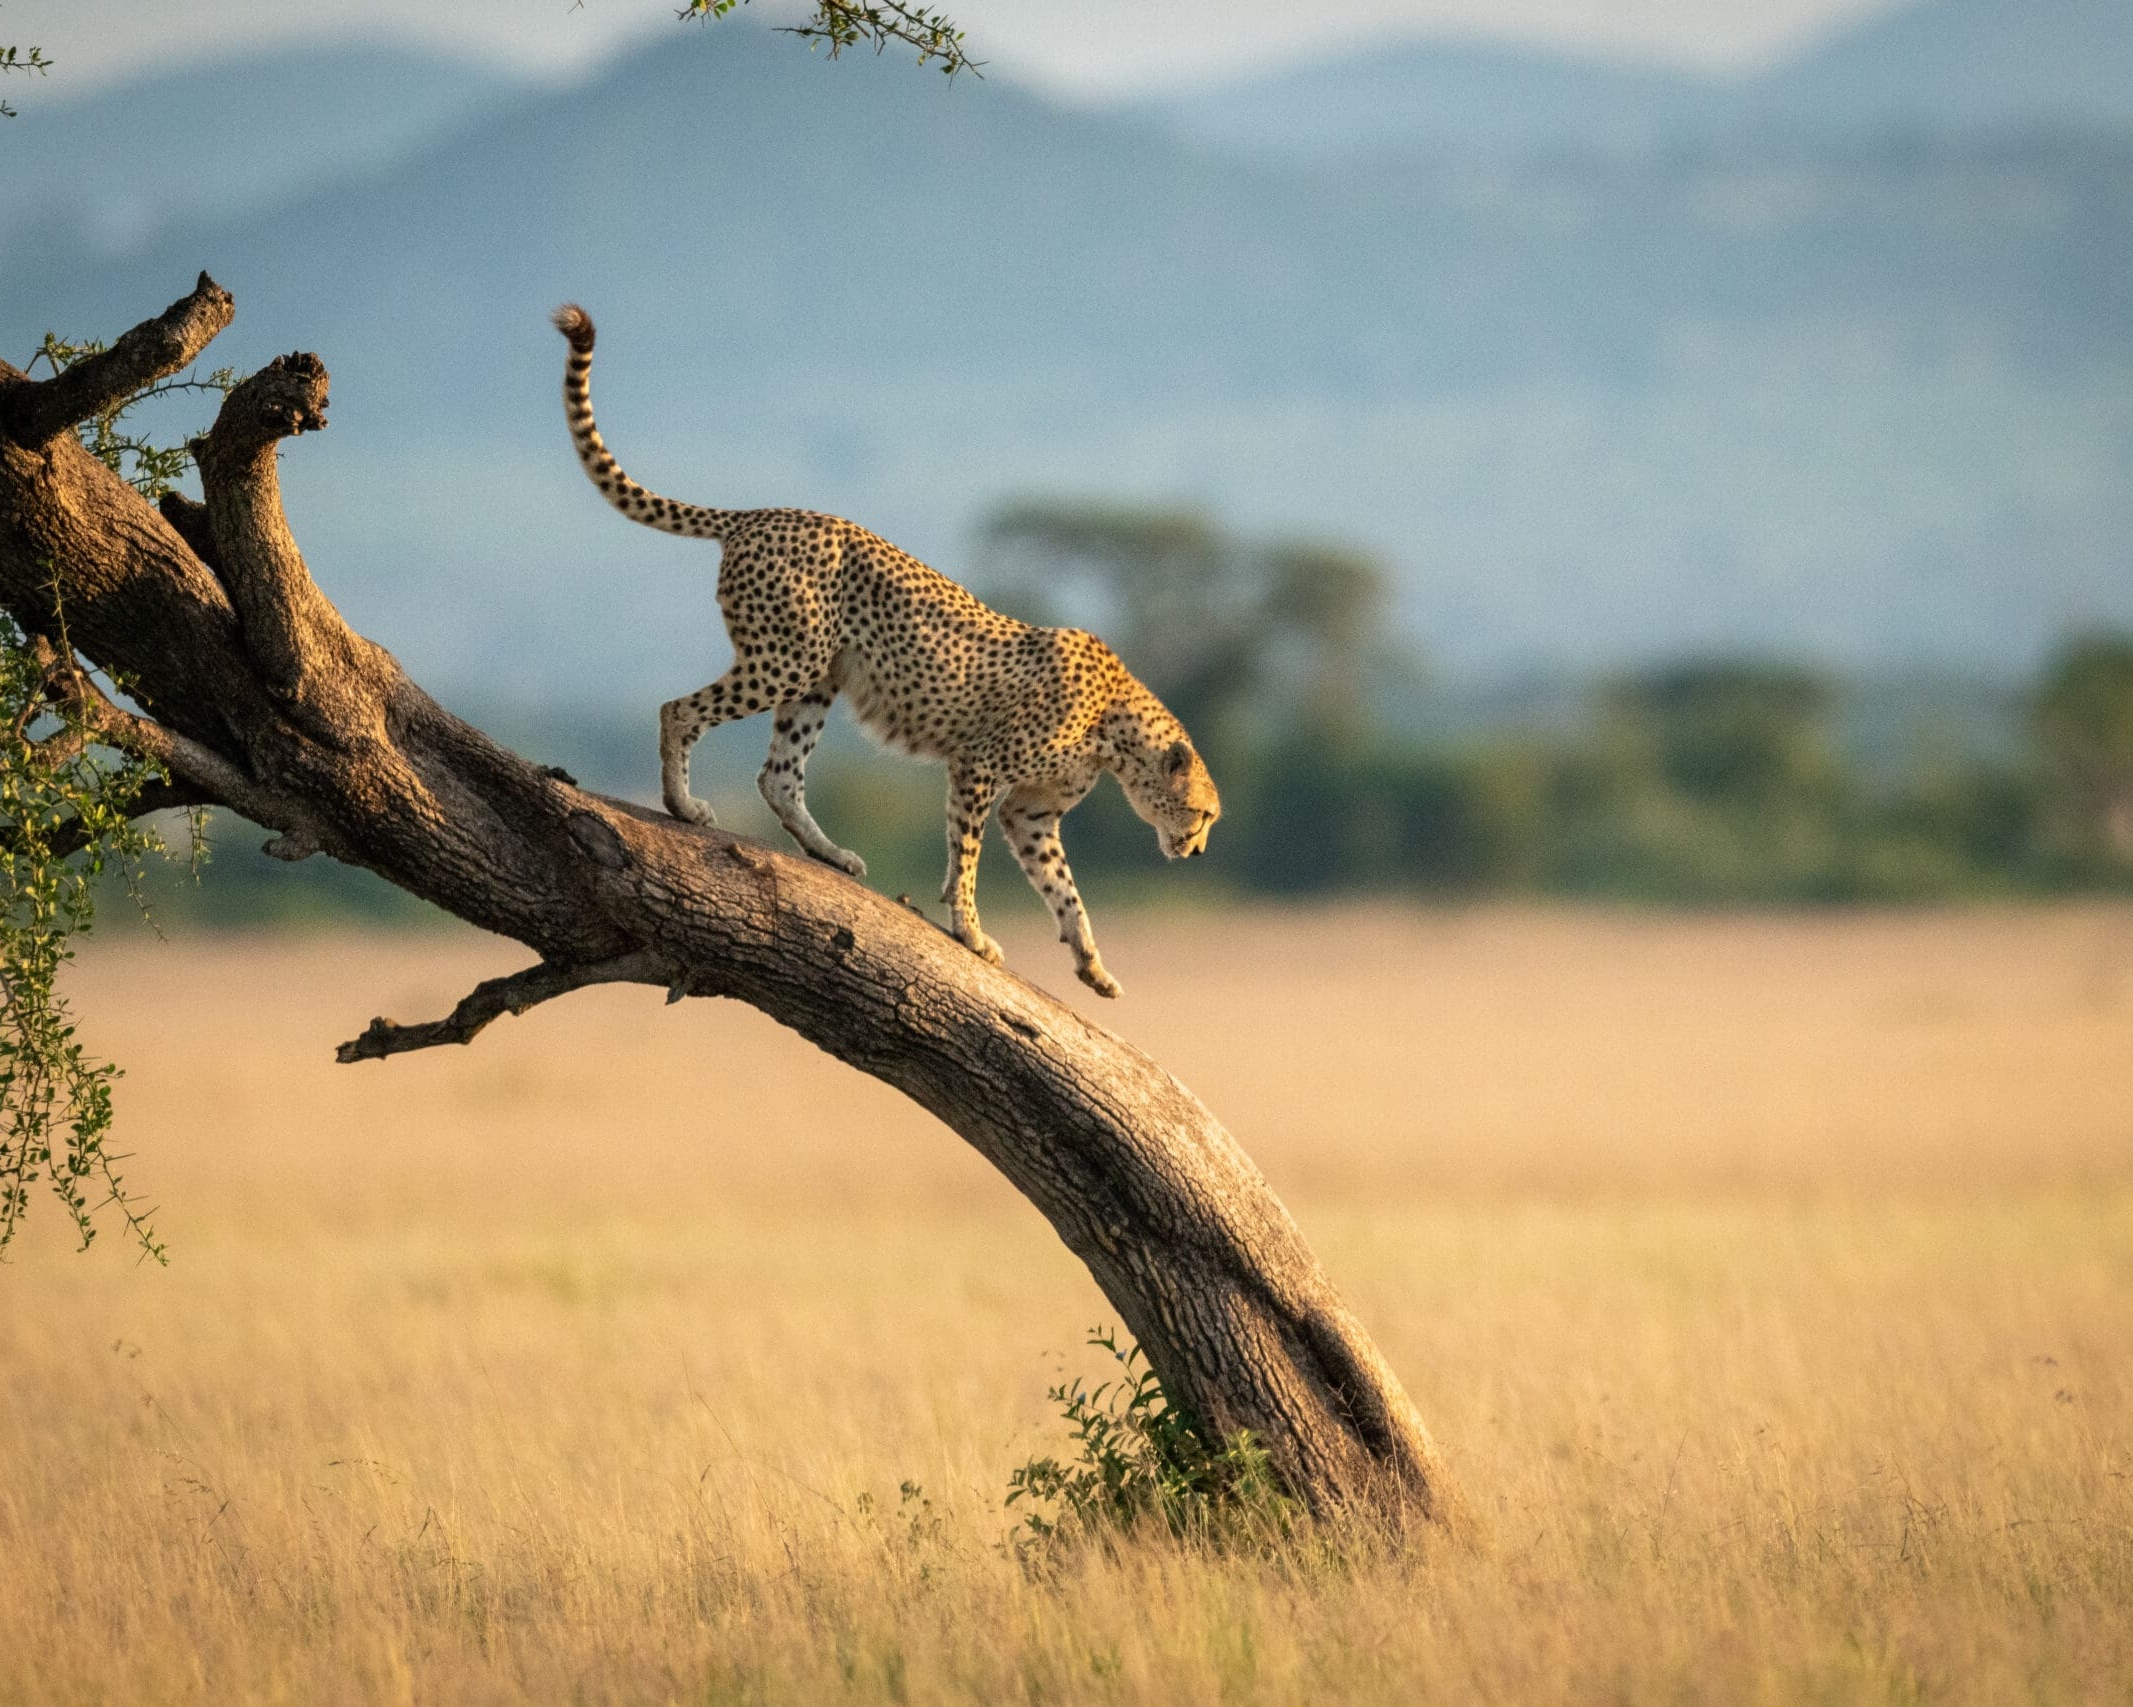 Cheetah walks down twisted tree in savannah, Tanzania